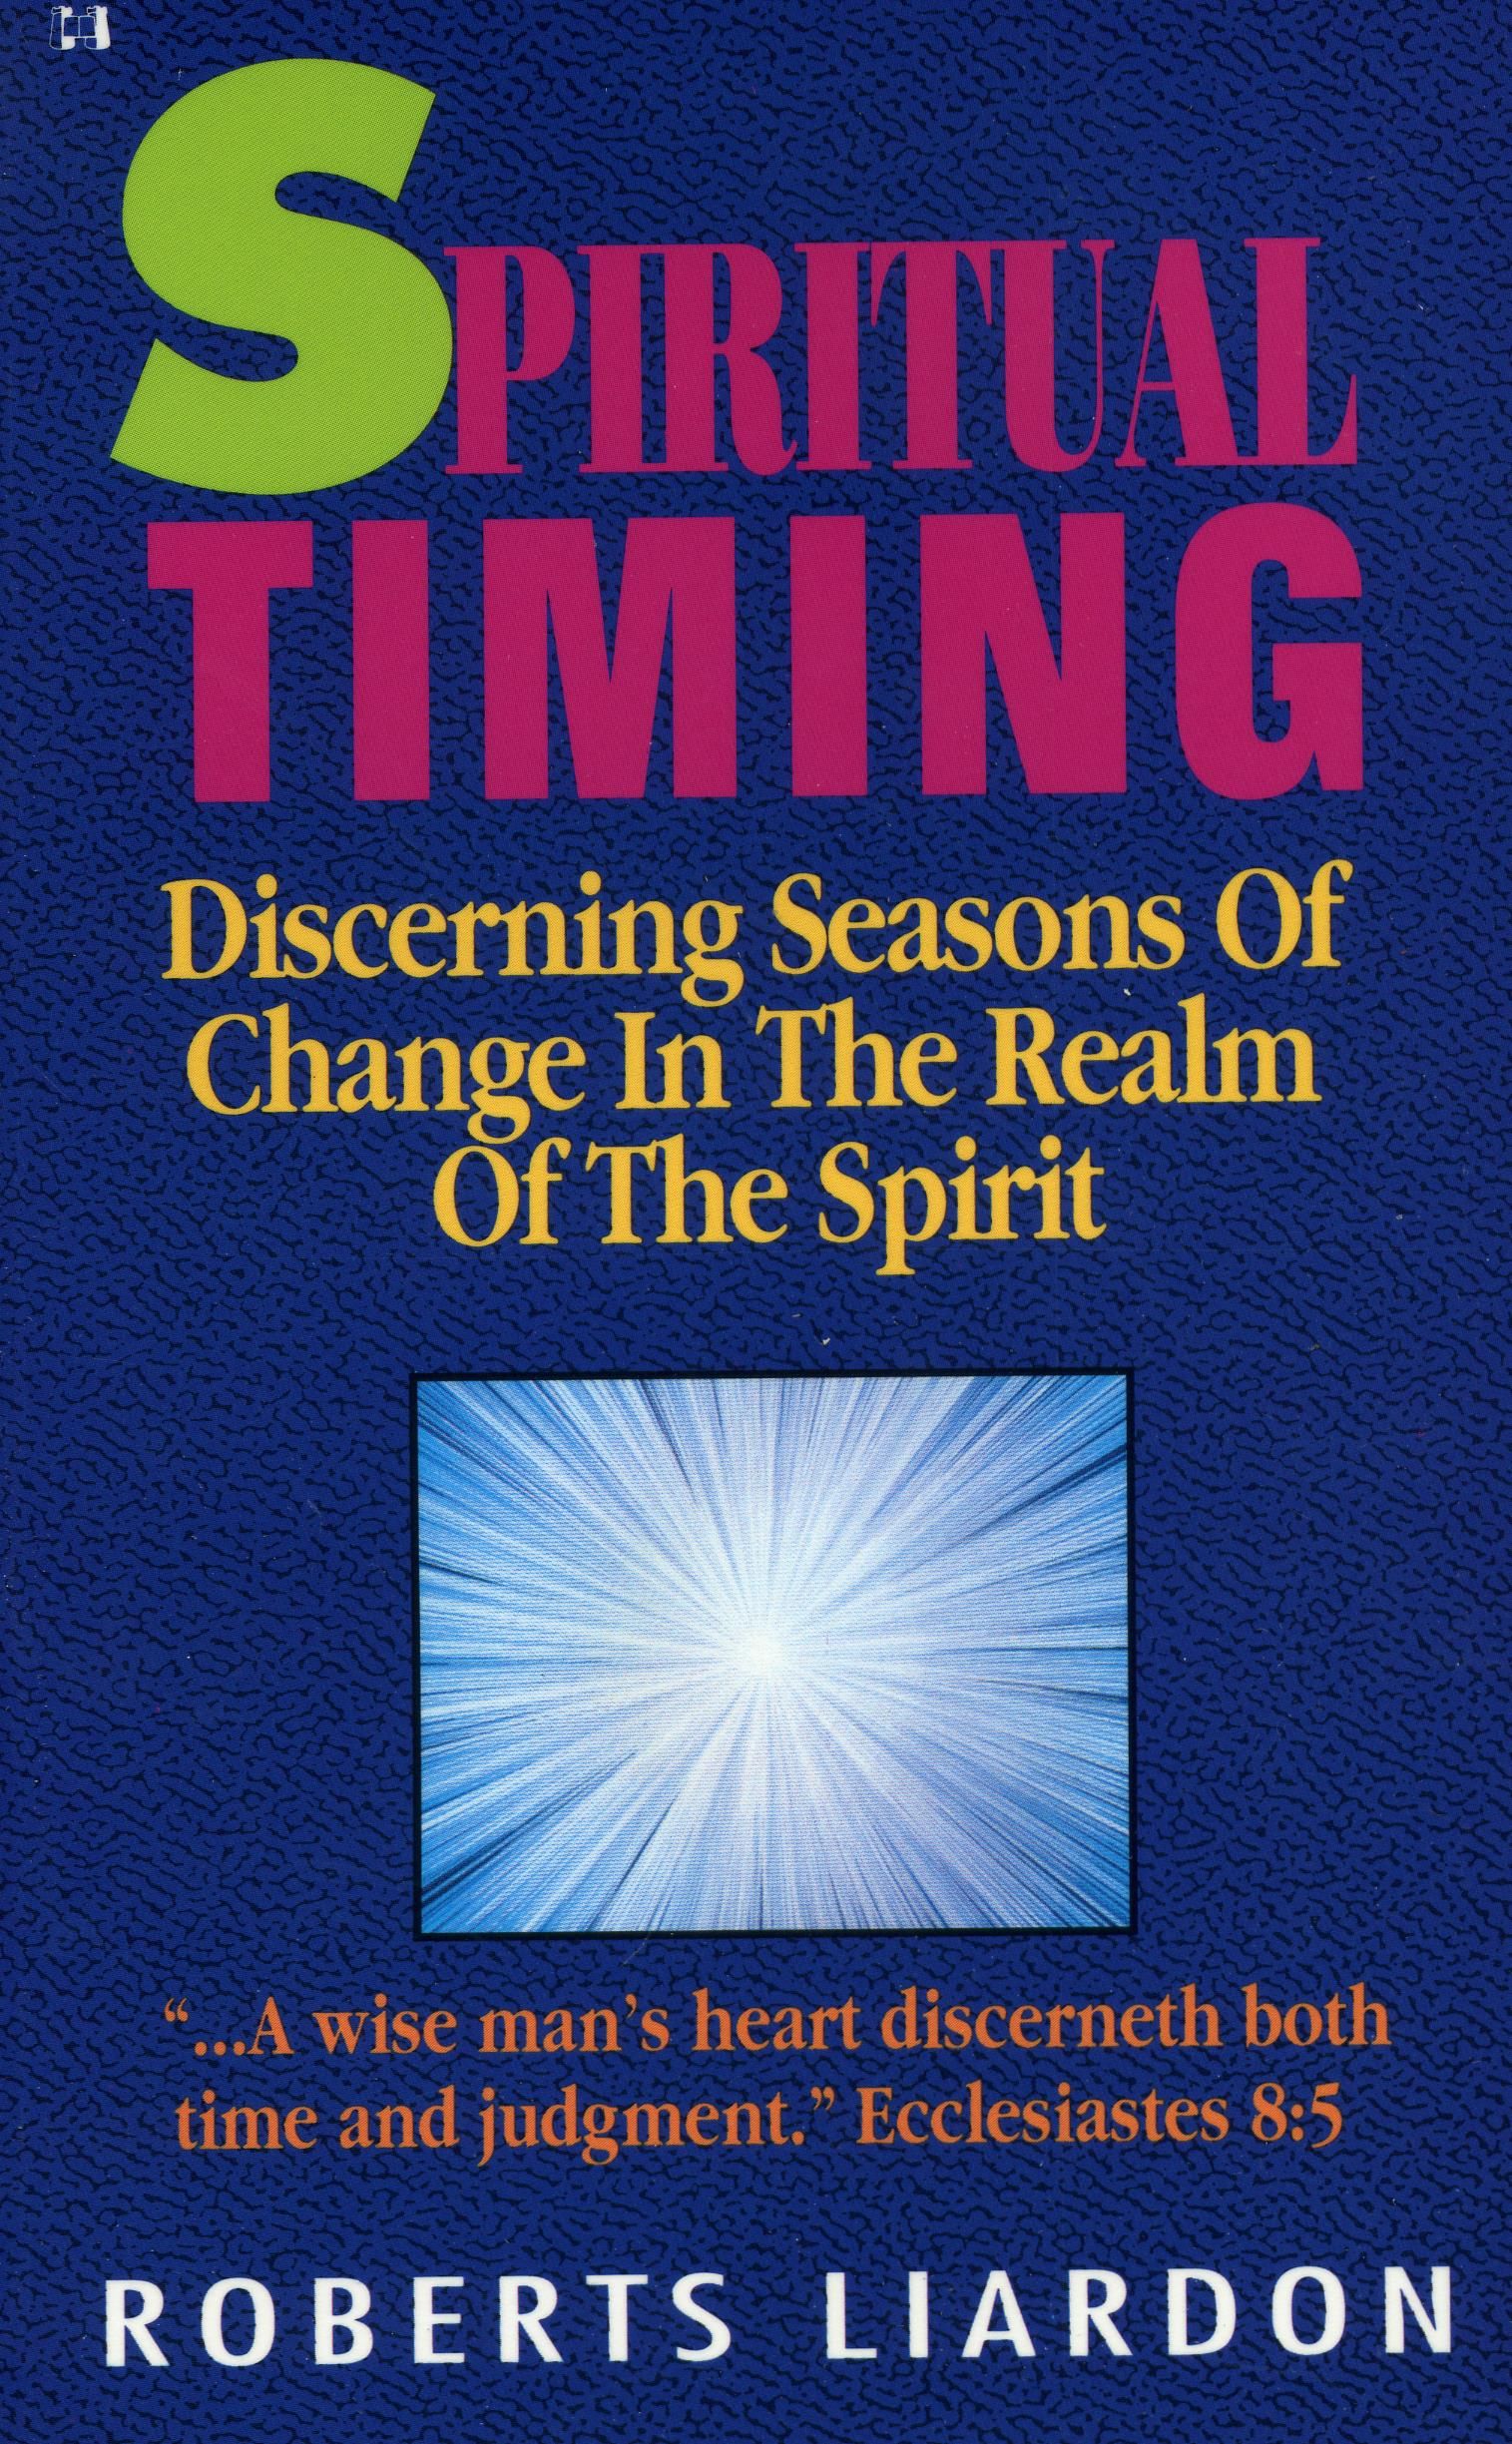 Roberts Liardon: Spiritual Timing